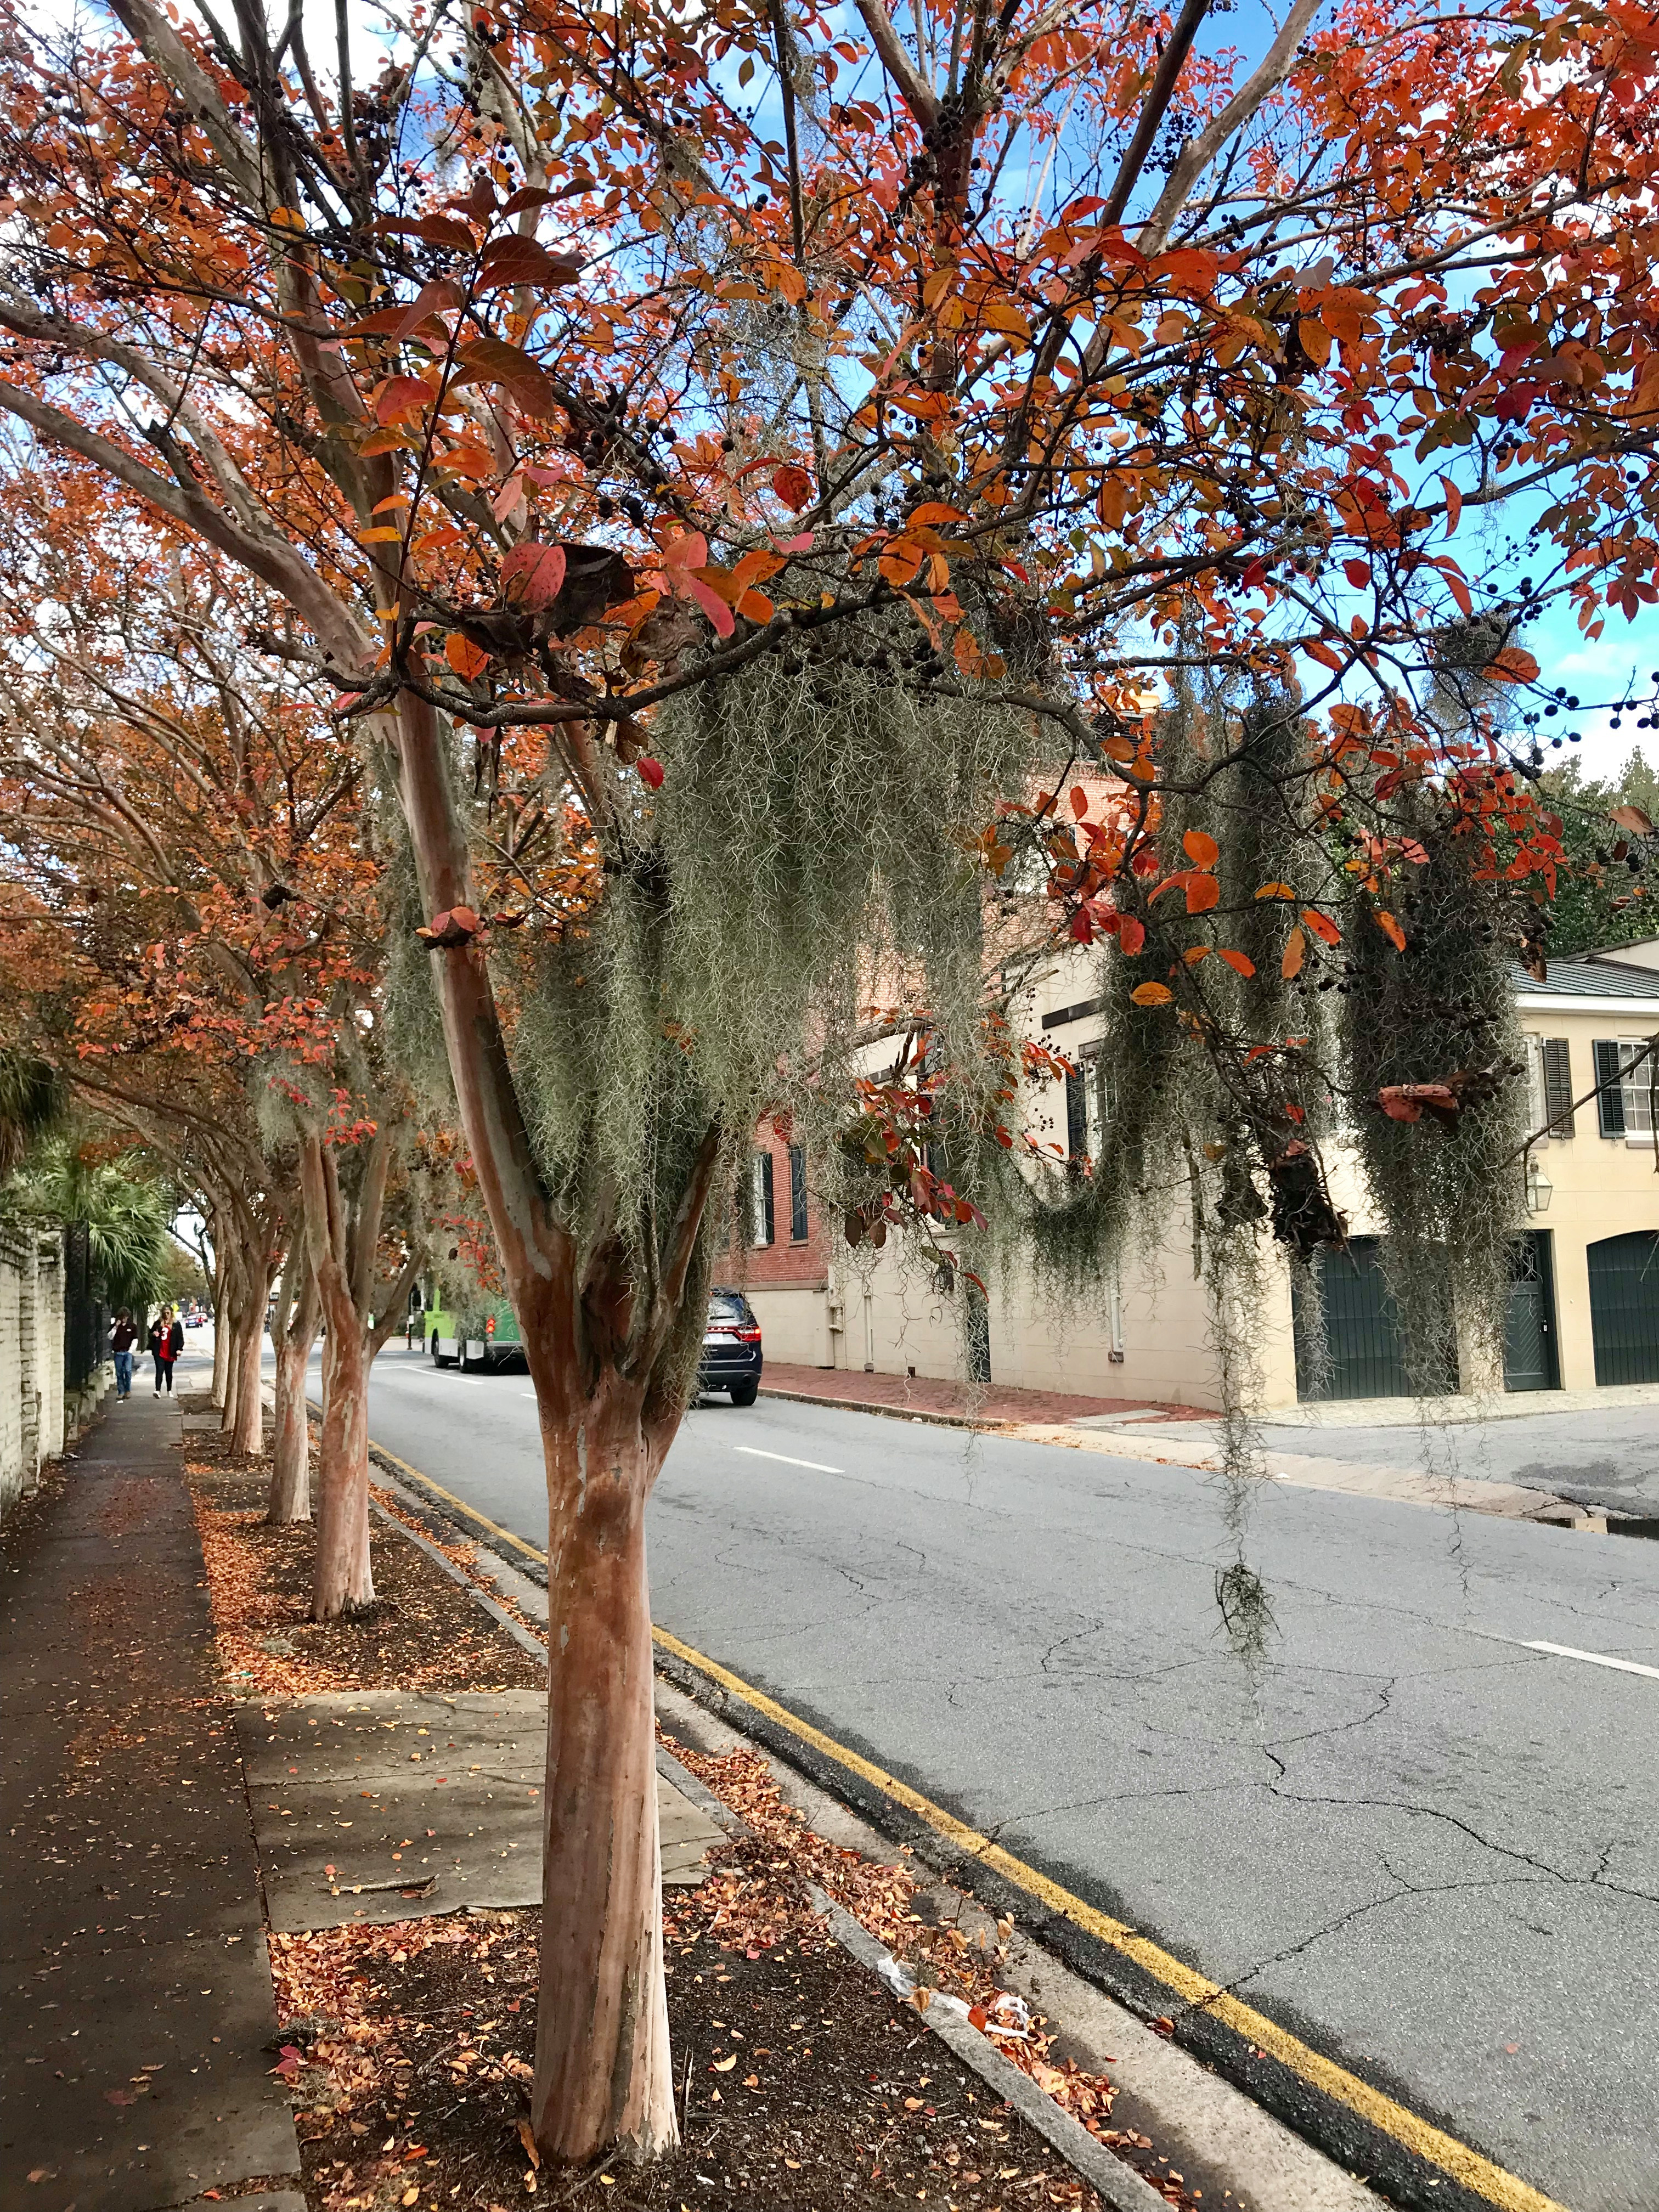 Spanish moss covers the trees in Savannah, Georgia